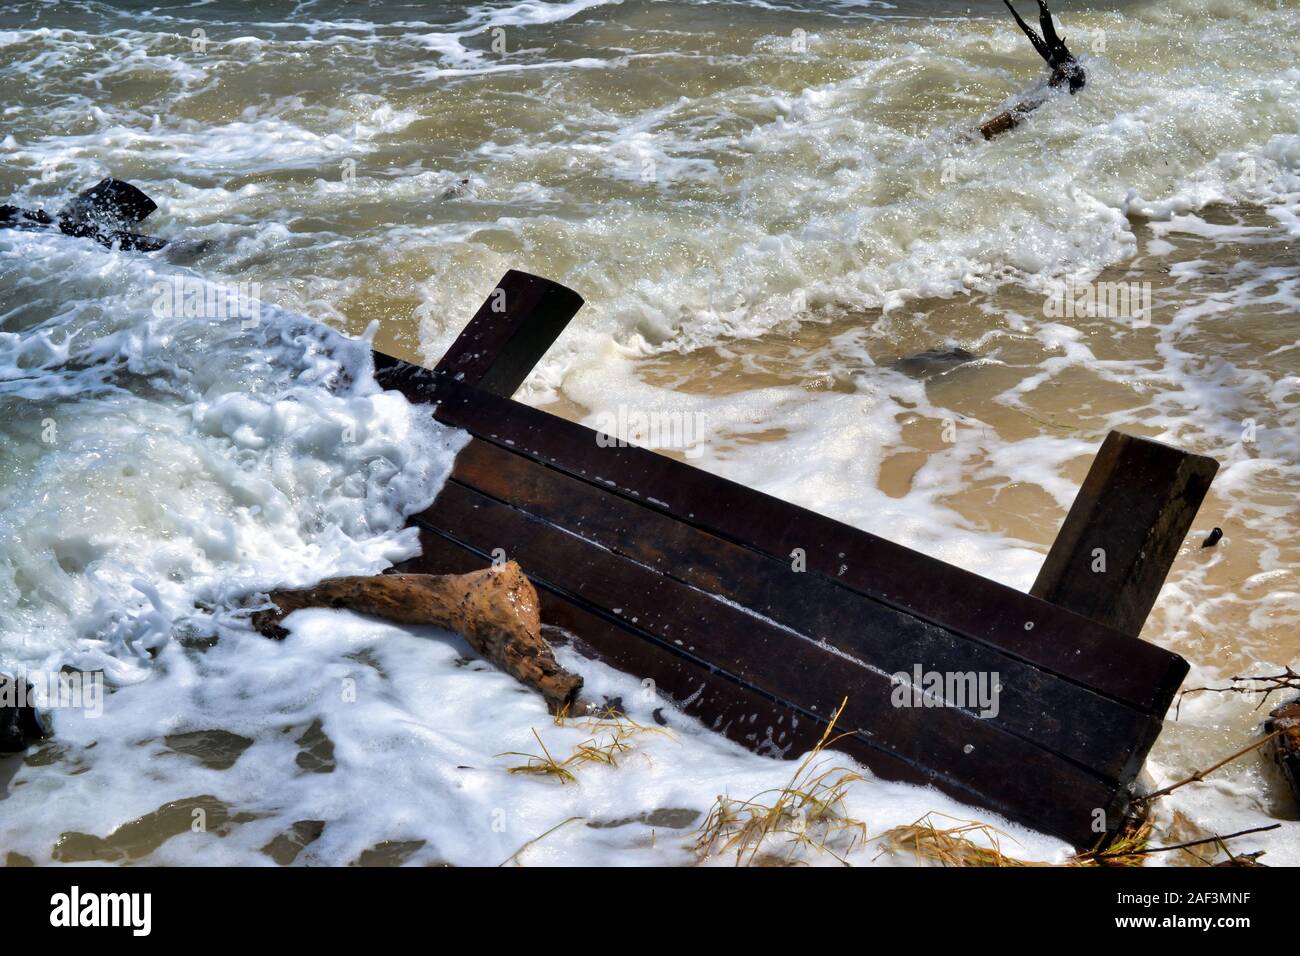 King Tide kombiniert mit starken Böen zerstören Holz- groyne (Barriere Erosion zu stoppen). Januar 2019 Bongaree, Queensland, Australien Stockfoto